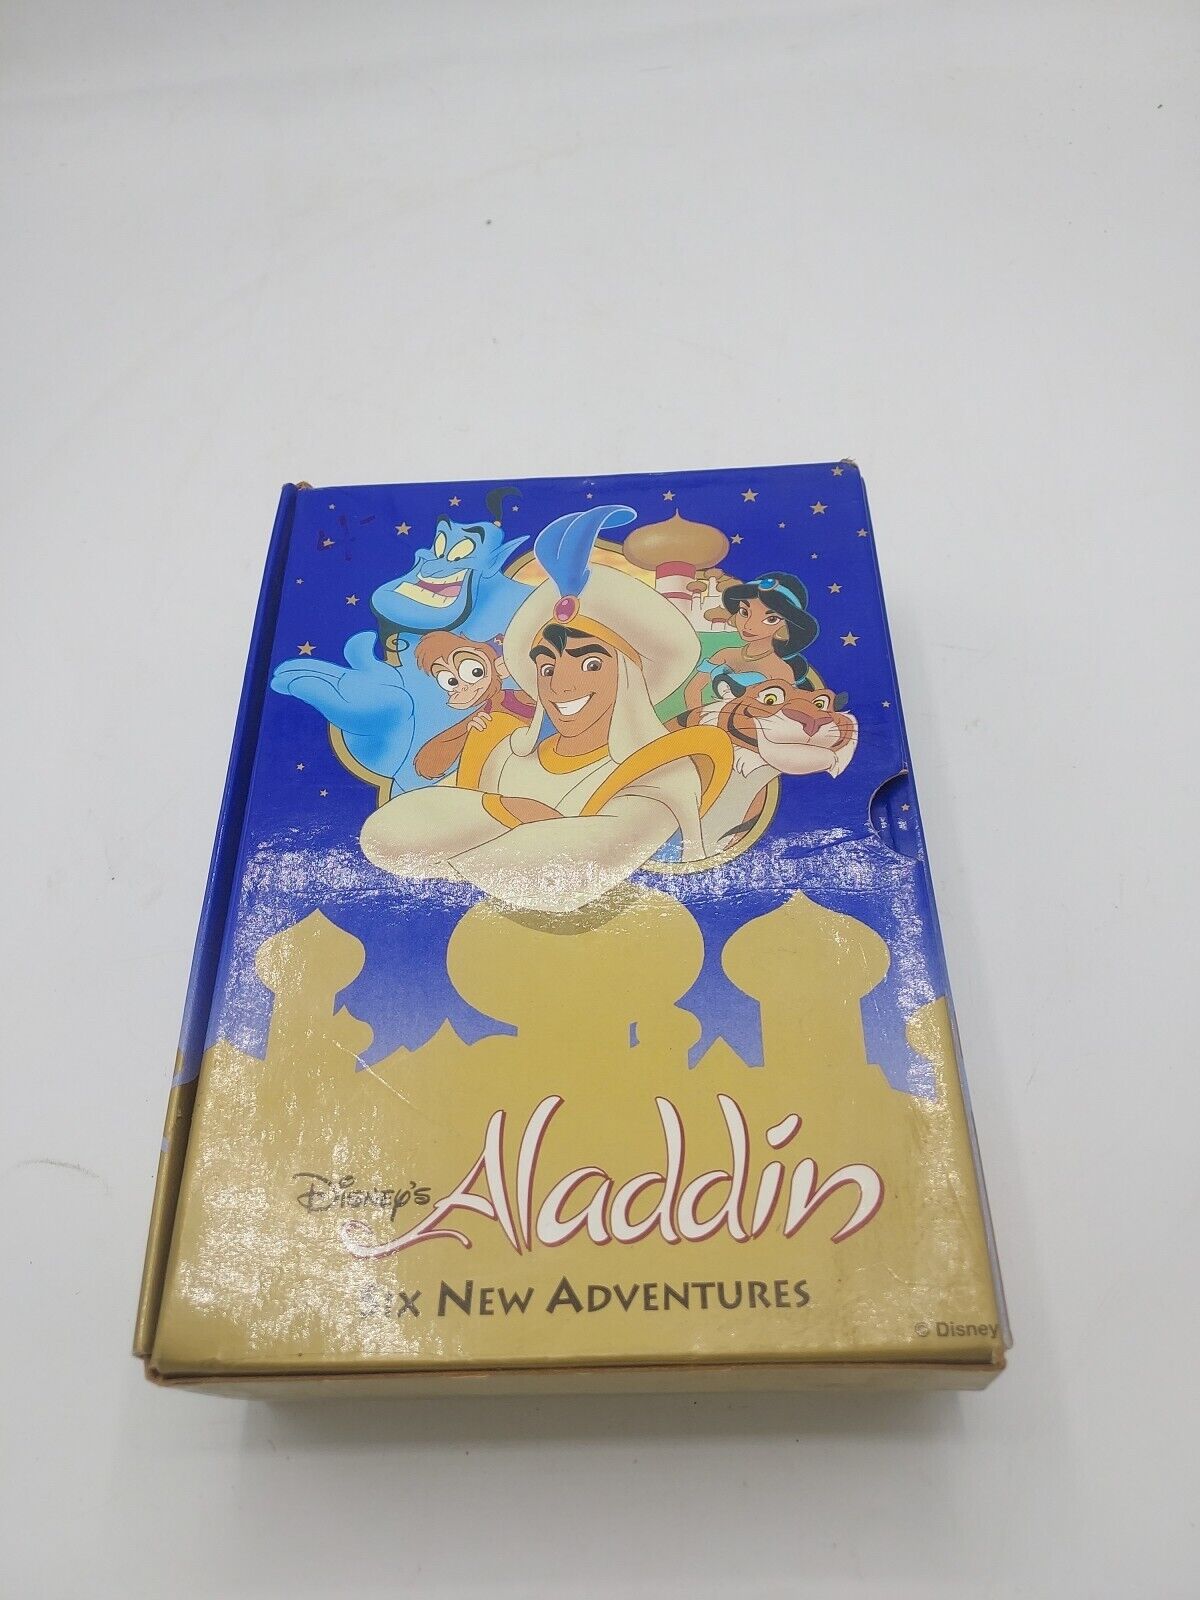 Vintage Disney's Aladdin Six New Adventures Book Set 1993 Hardcover Disney Books